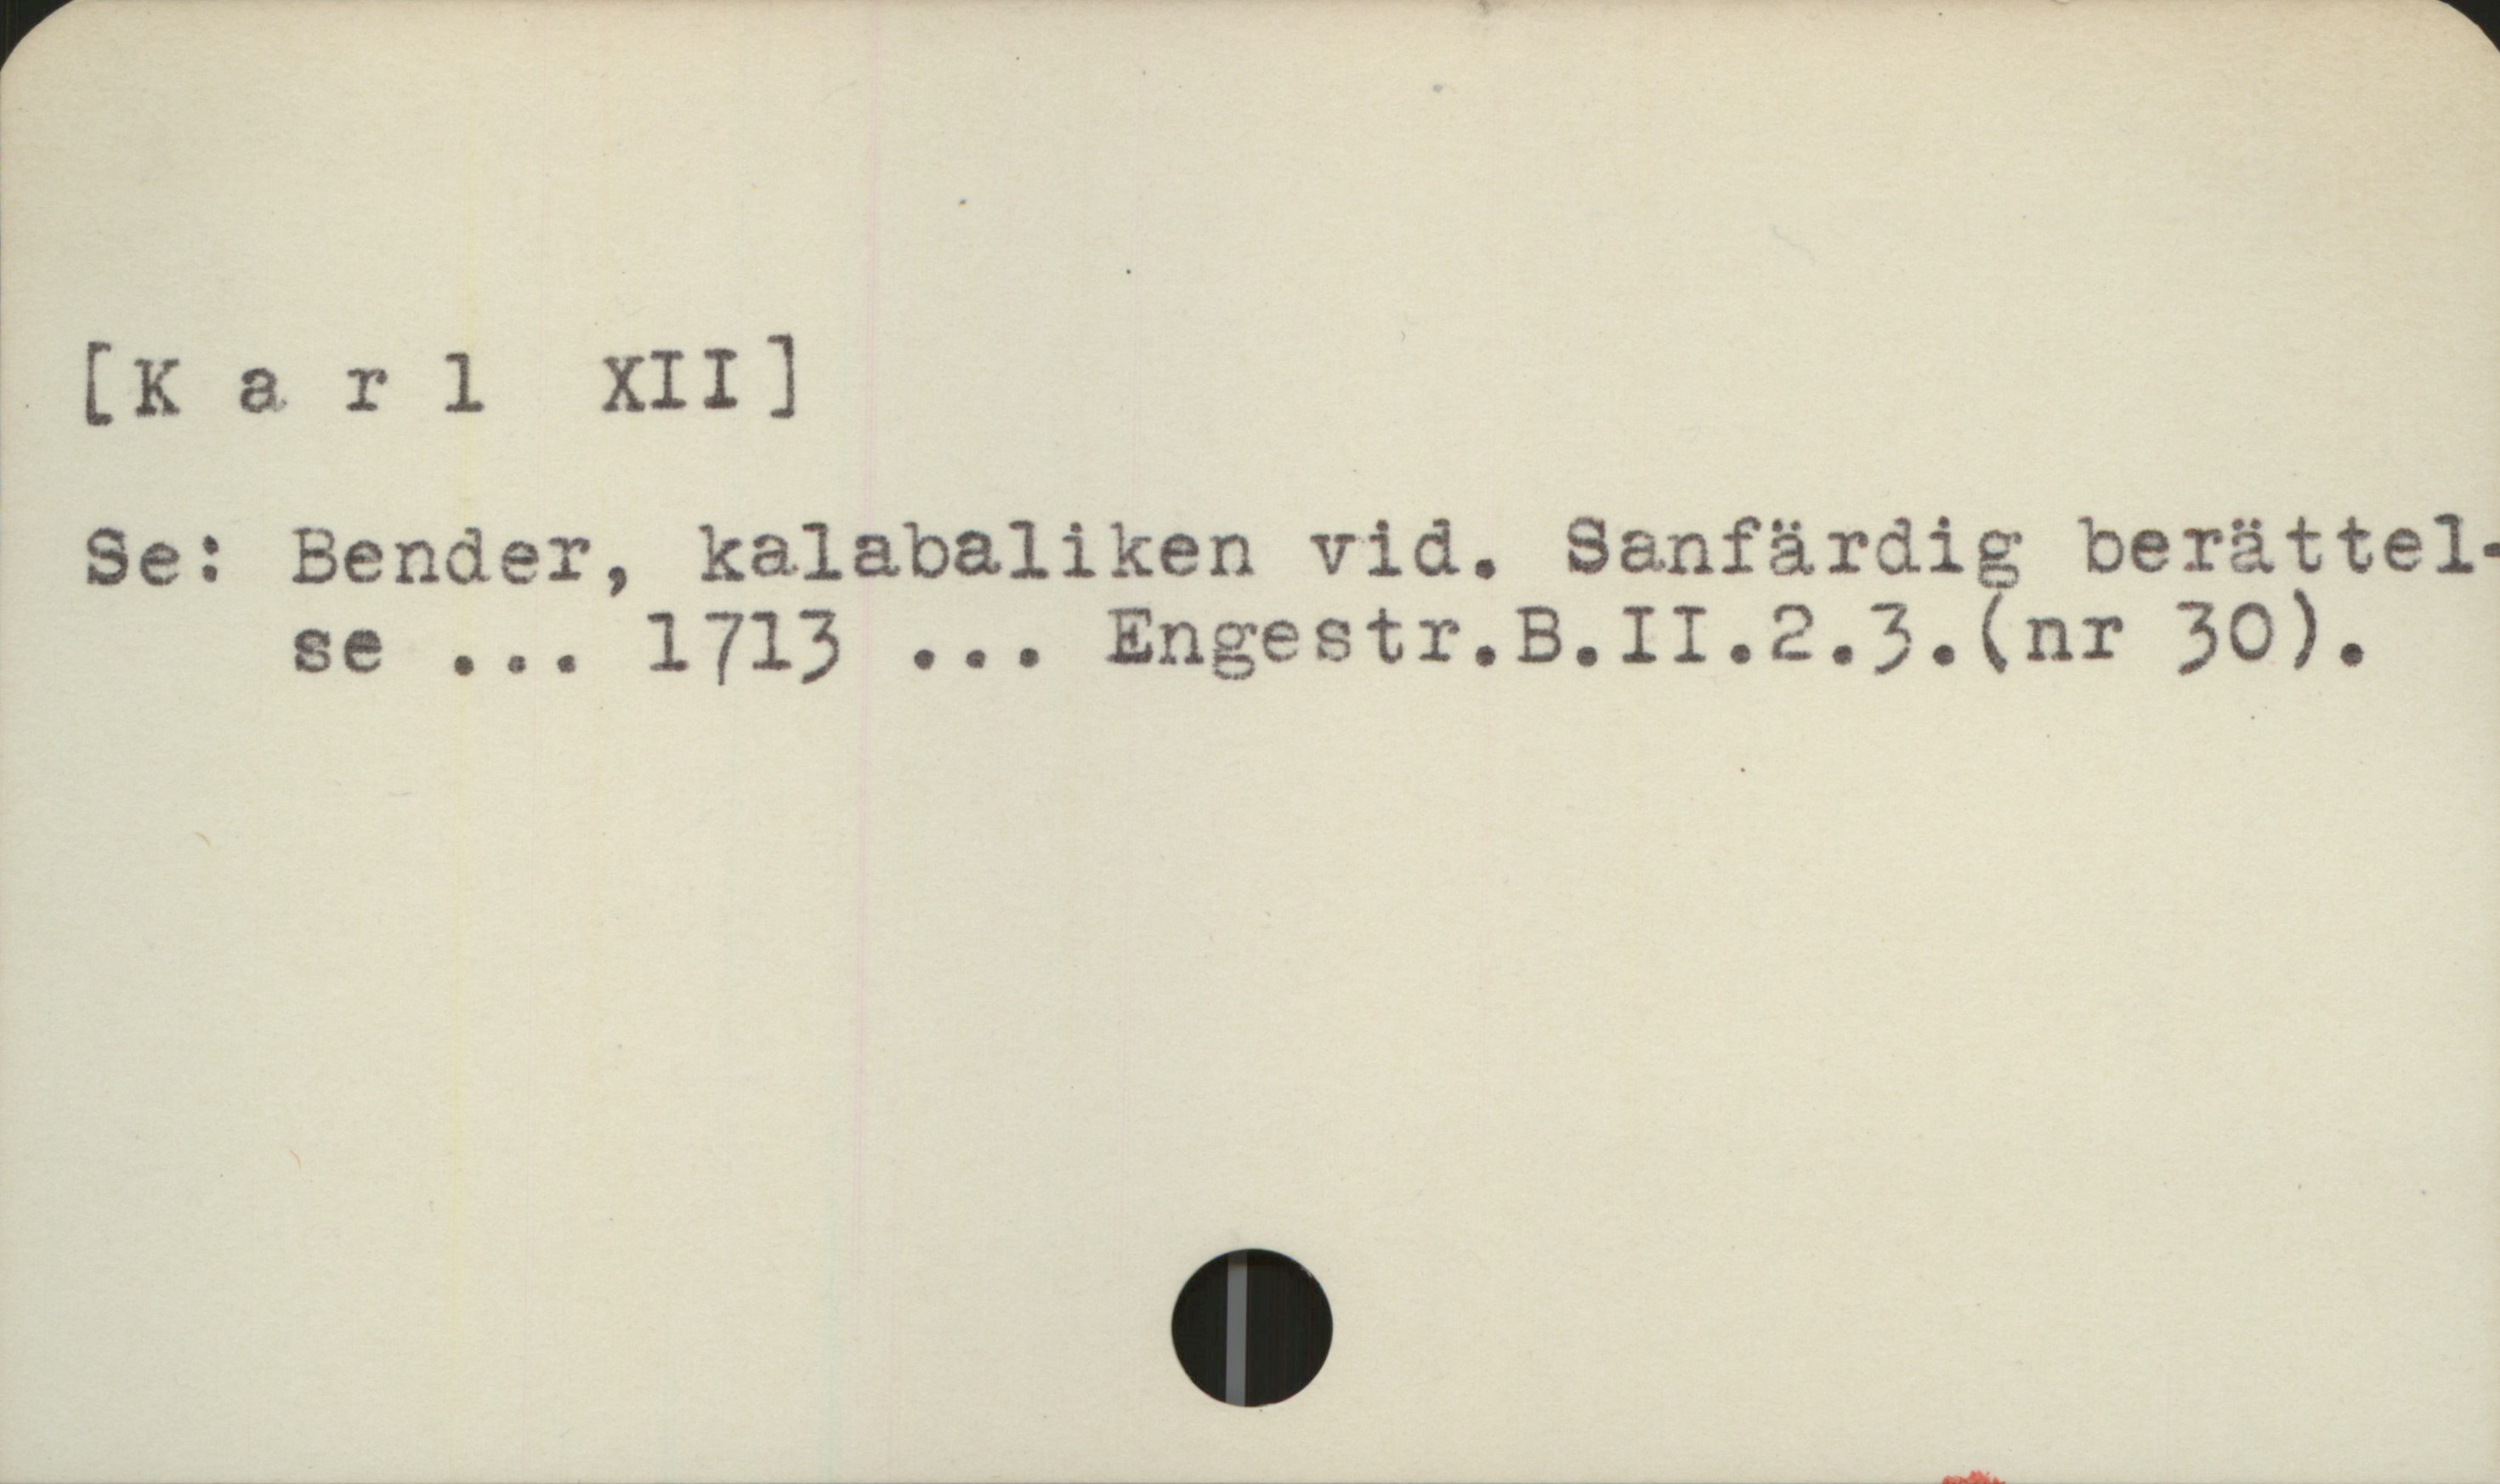  [Karl XII]
Se: Bender, kalabaliken vid. Sanfärdig berättel.
ge ,... 1/13 ... Engestr.B.II.2.3.%ur 30).

